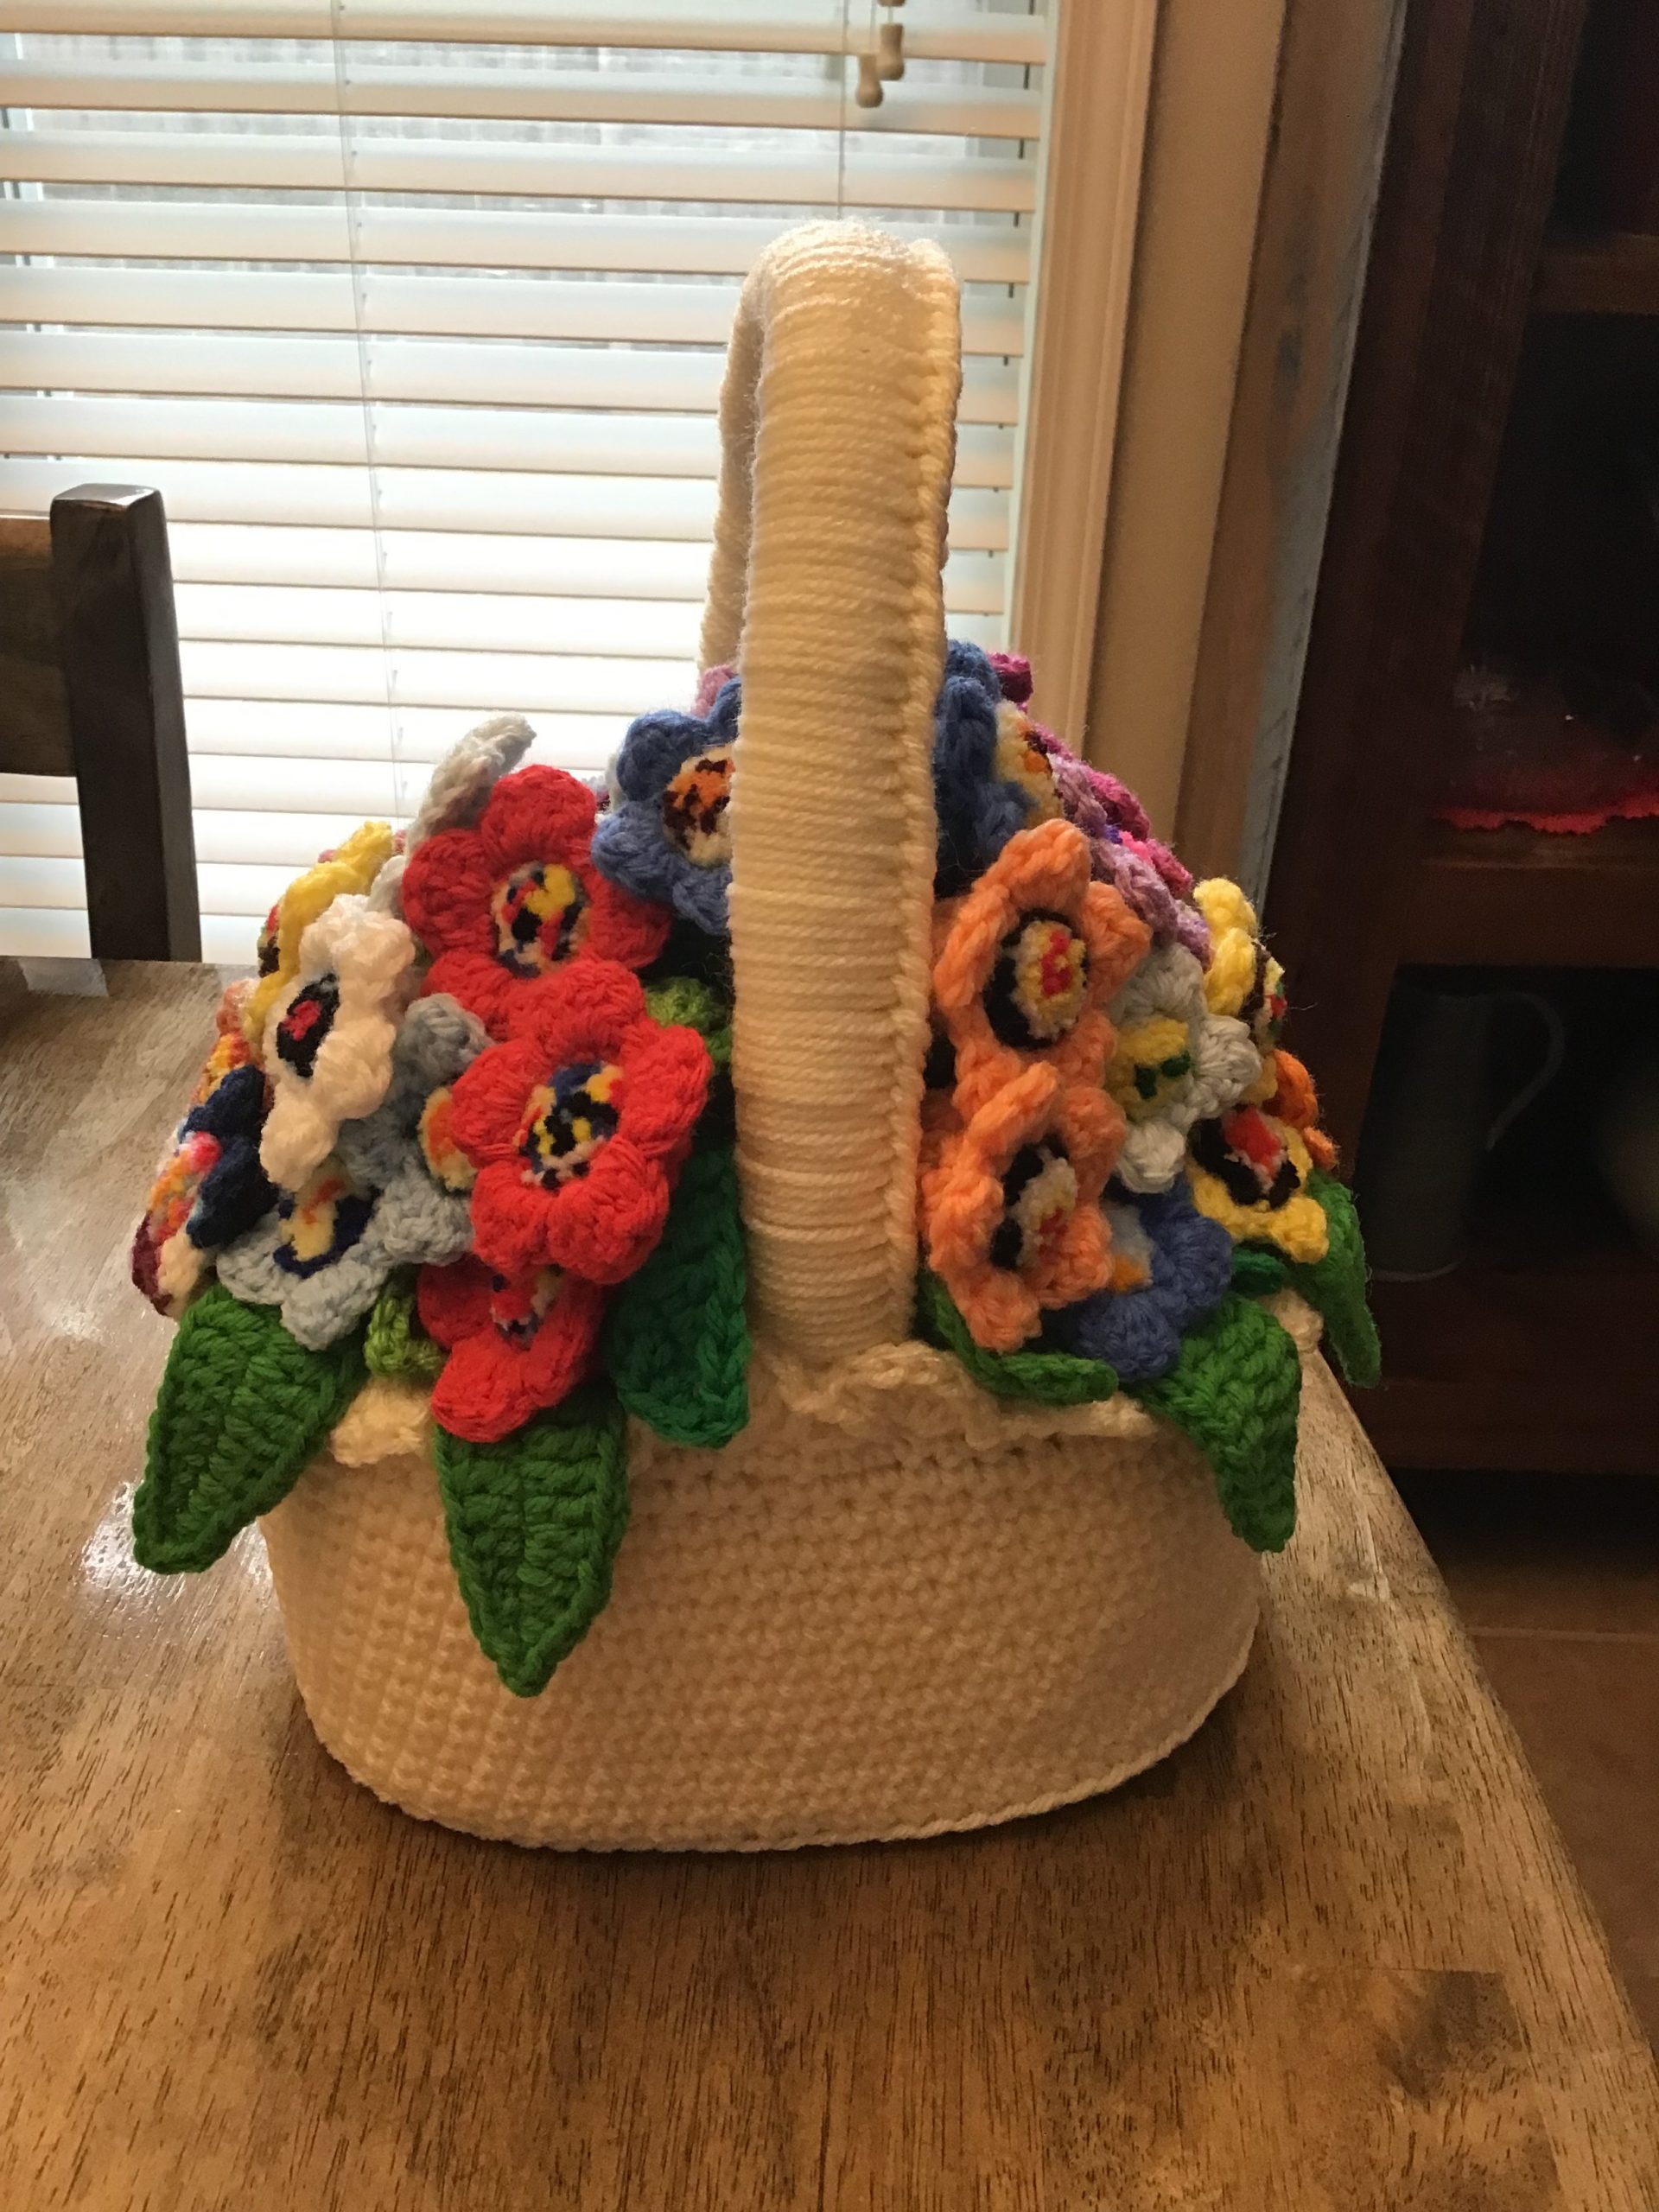 A soft basket of handmade flowers